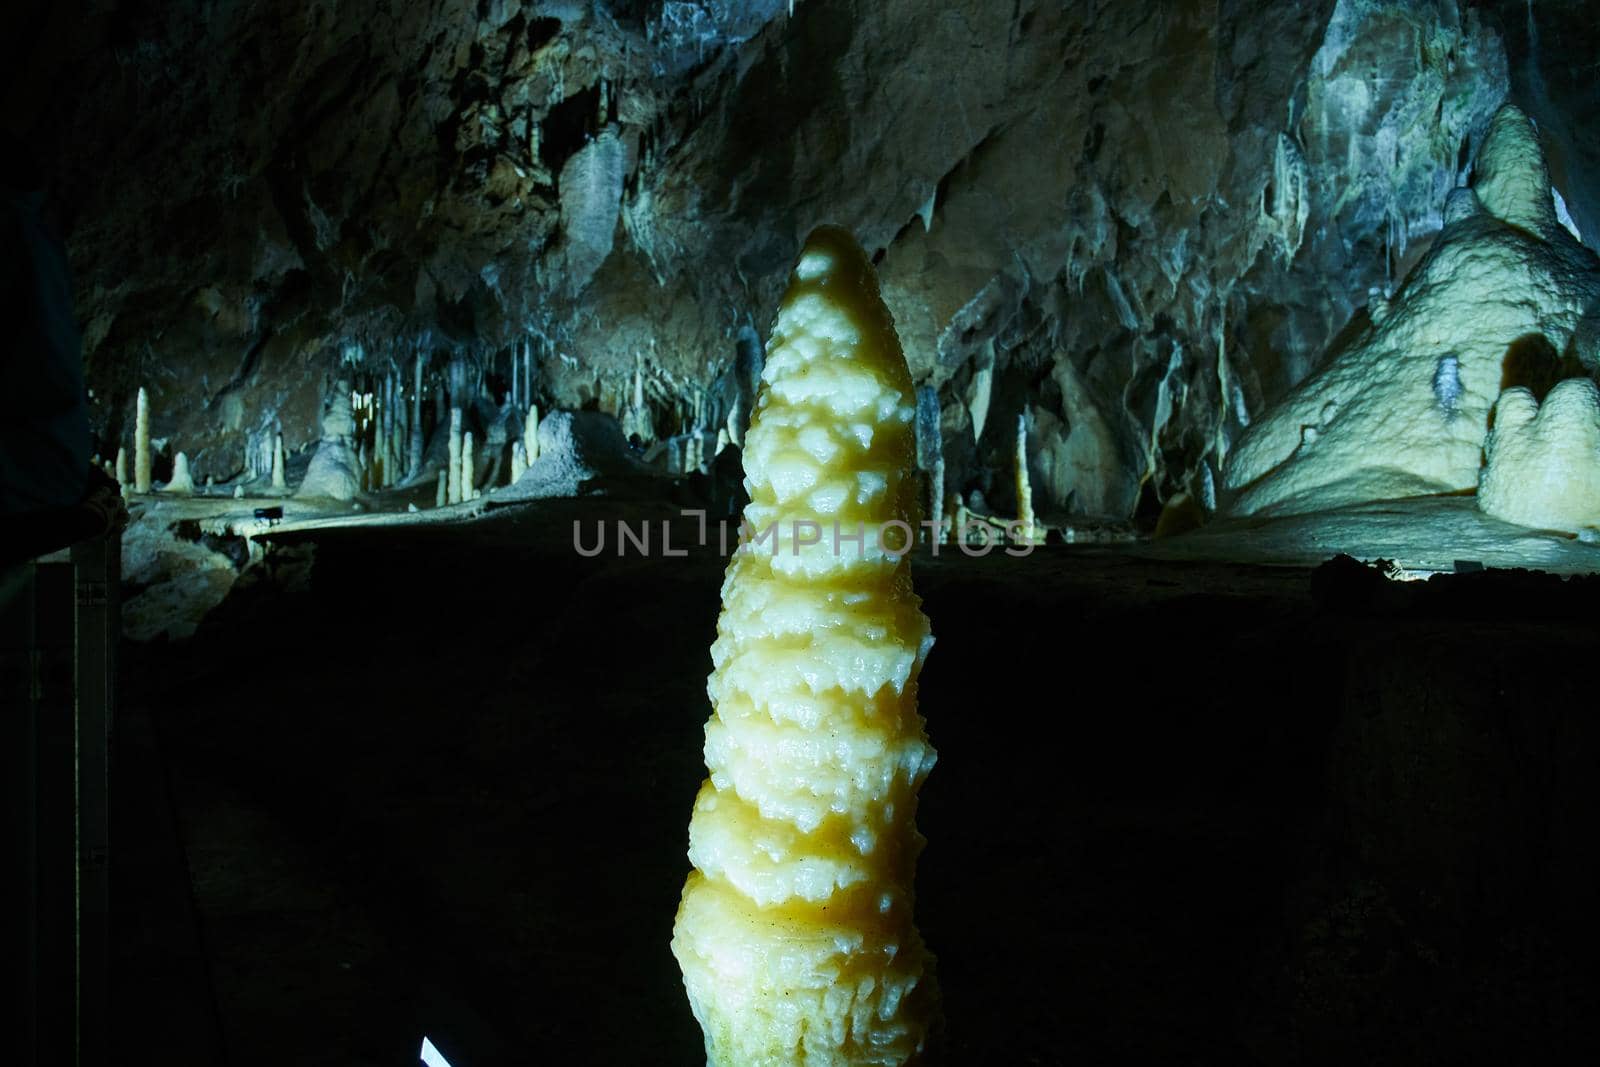 Limestone formations inside Macocha caves, Czech Republic by Jindrich_Blecha